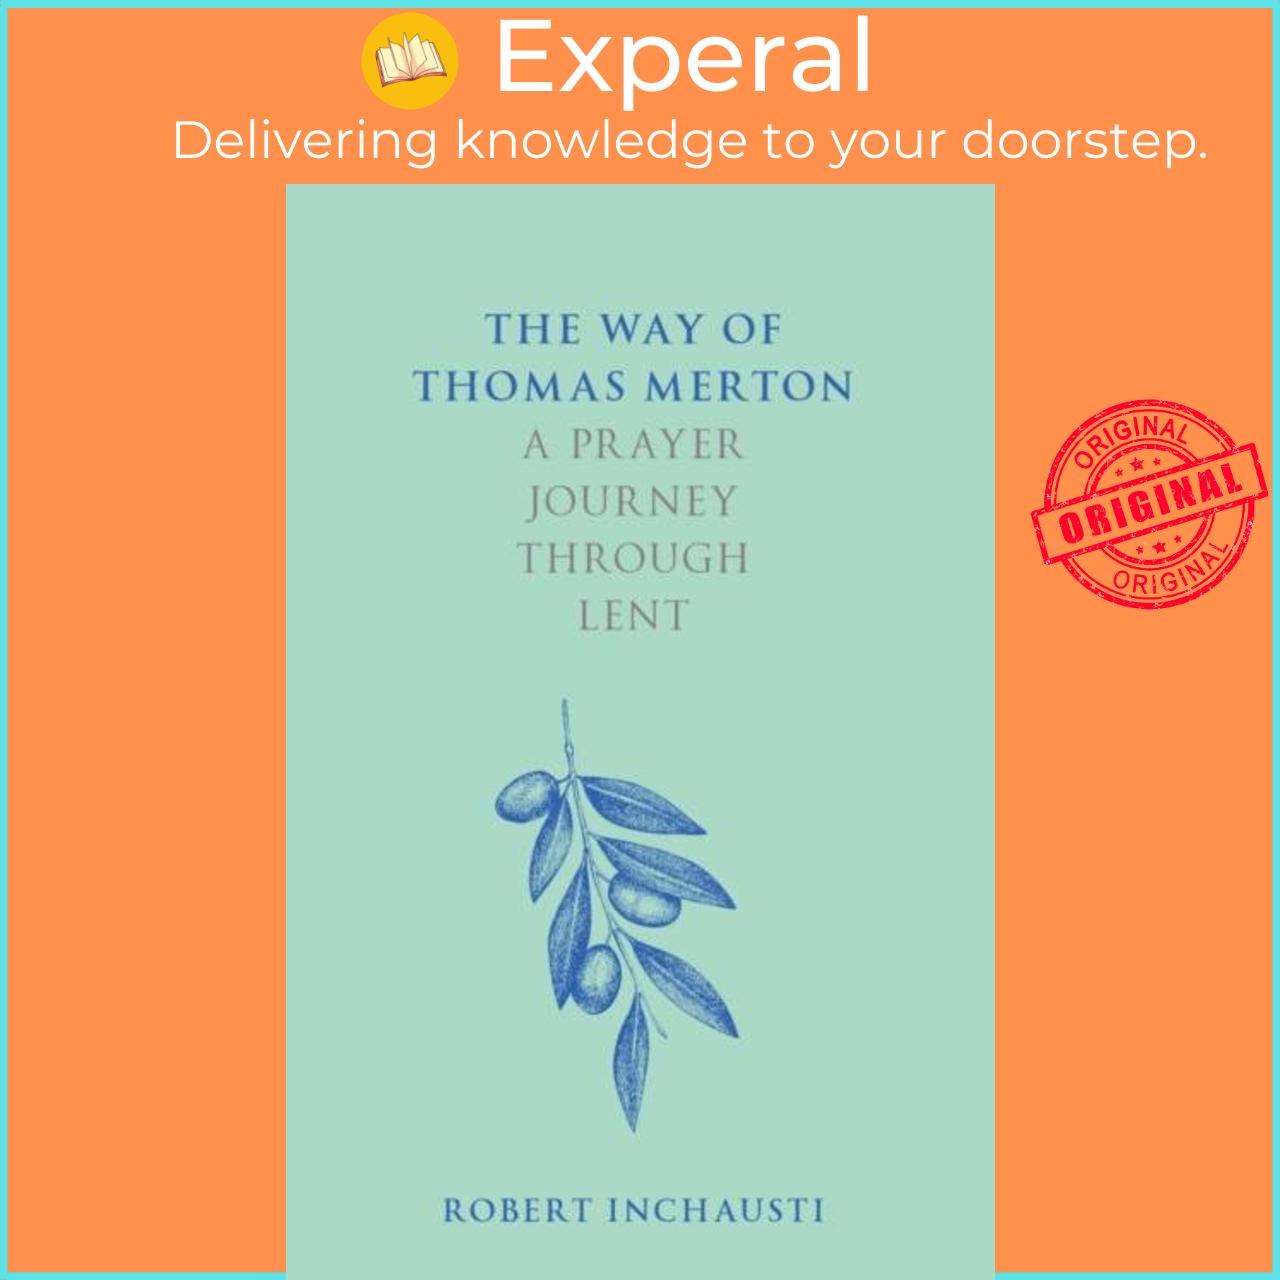 Sách - The Way of Thomas Merton - A prayer journey through Lent by Robert Inchausti (UK edition, paperback)